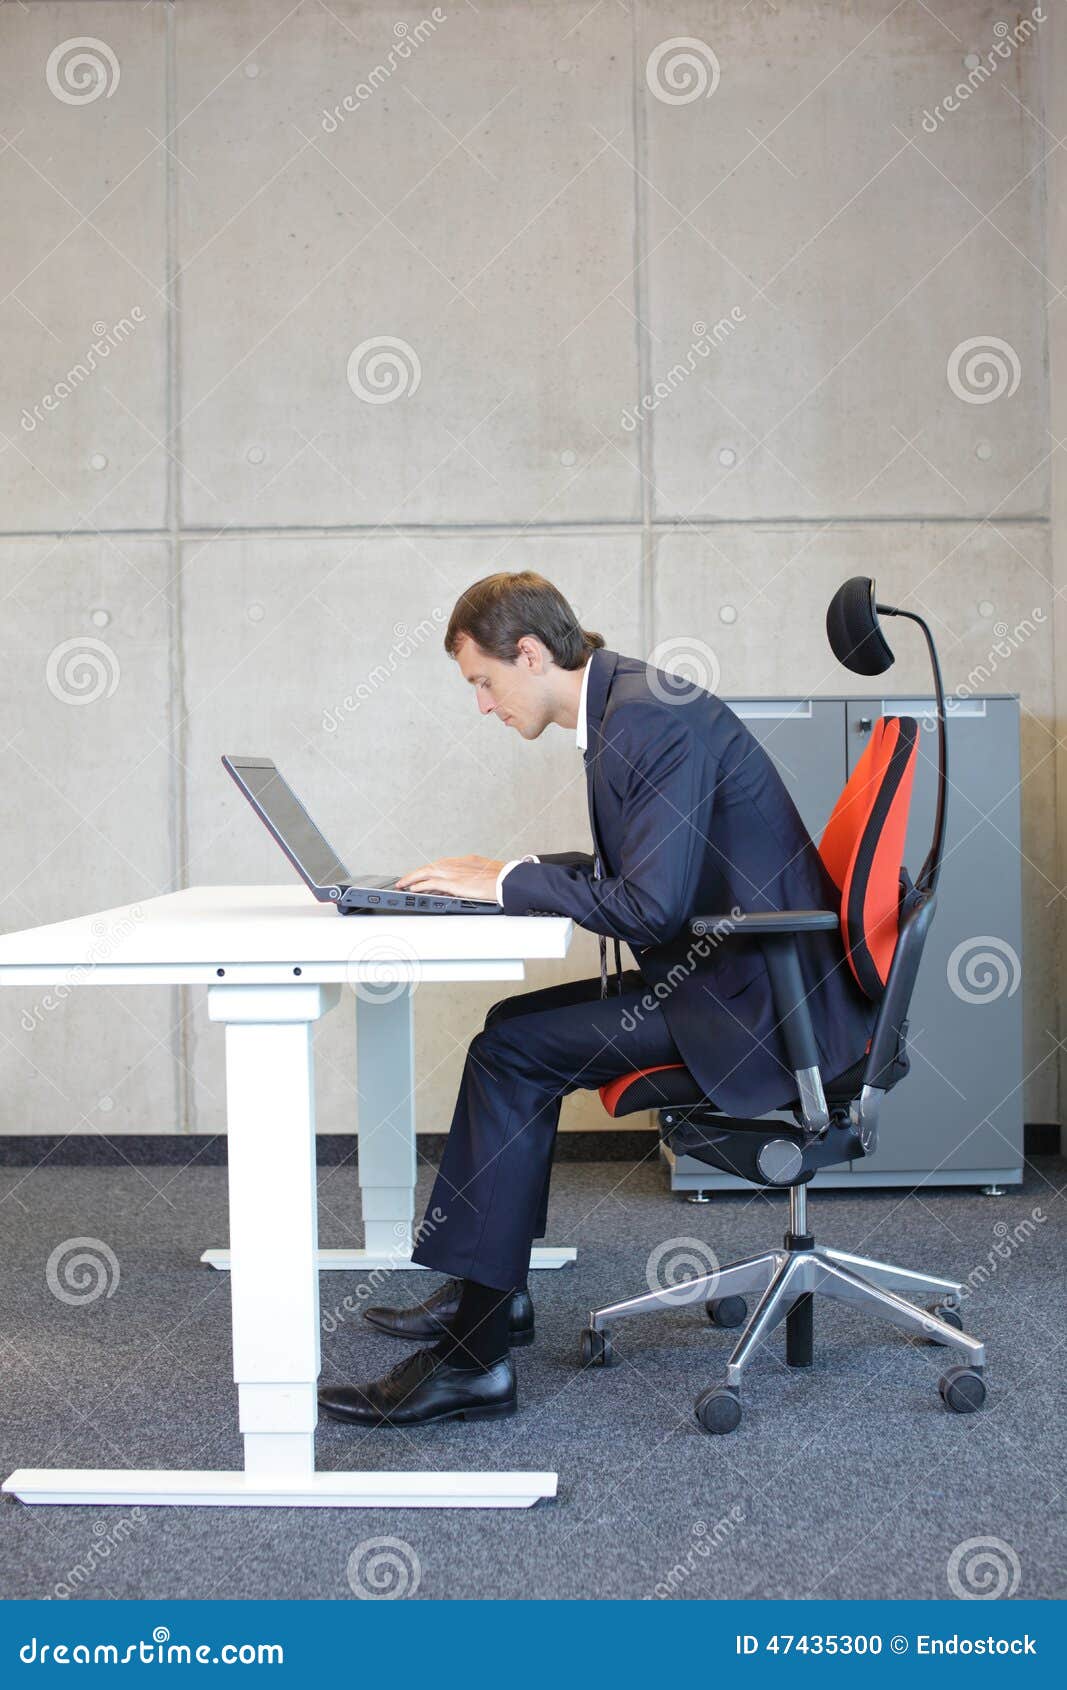 Bad Sitting Posture At Laptop Stock Photo - Image: 47435300